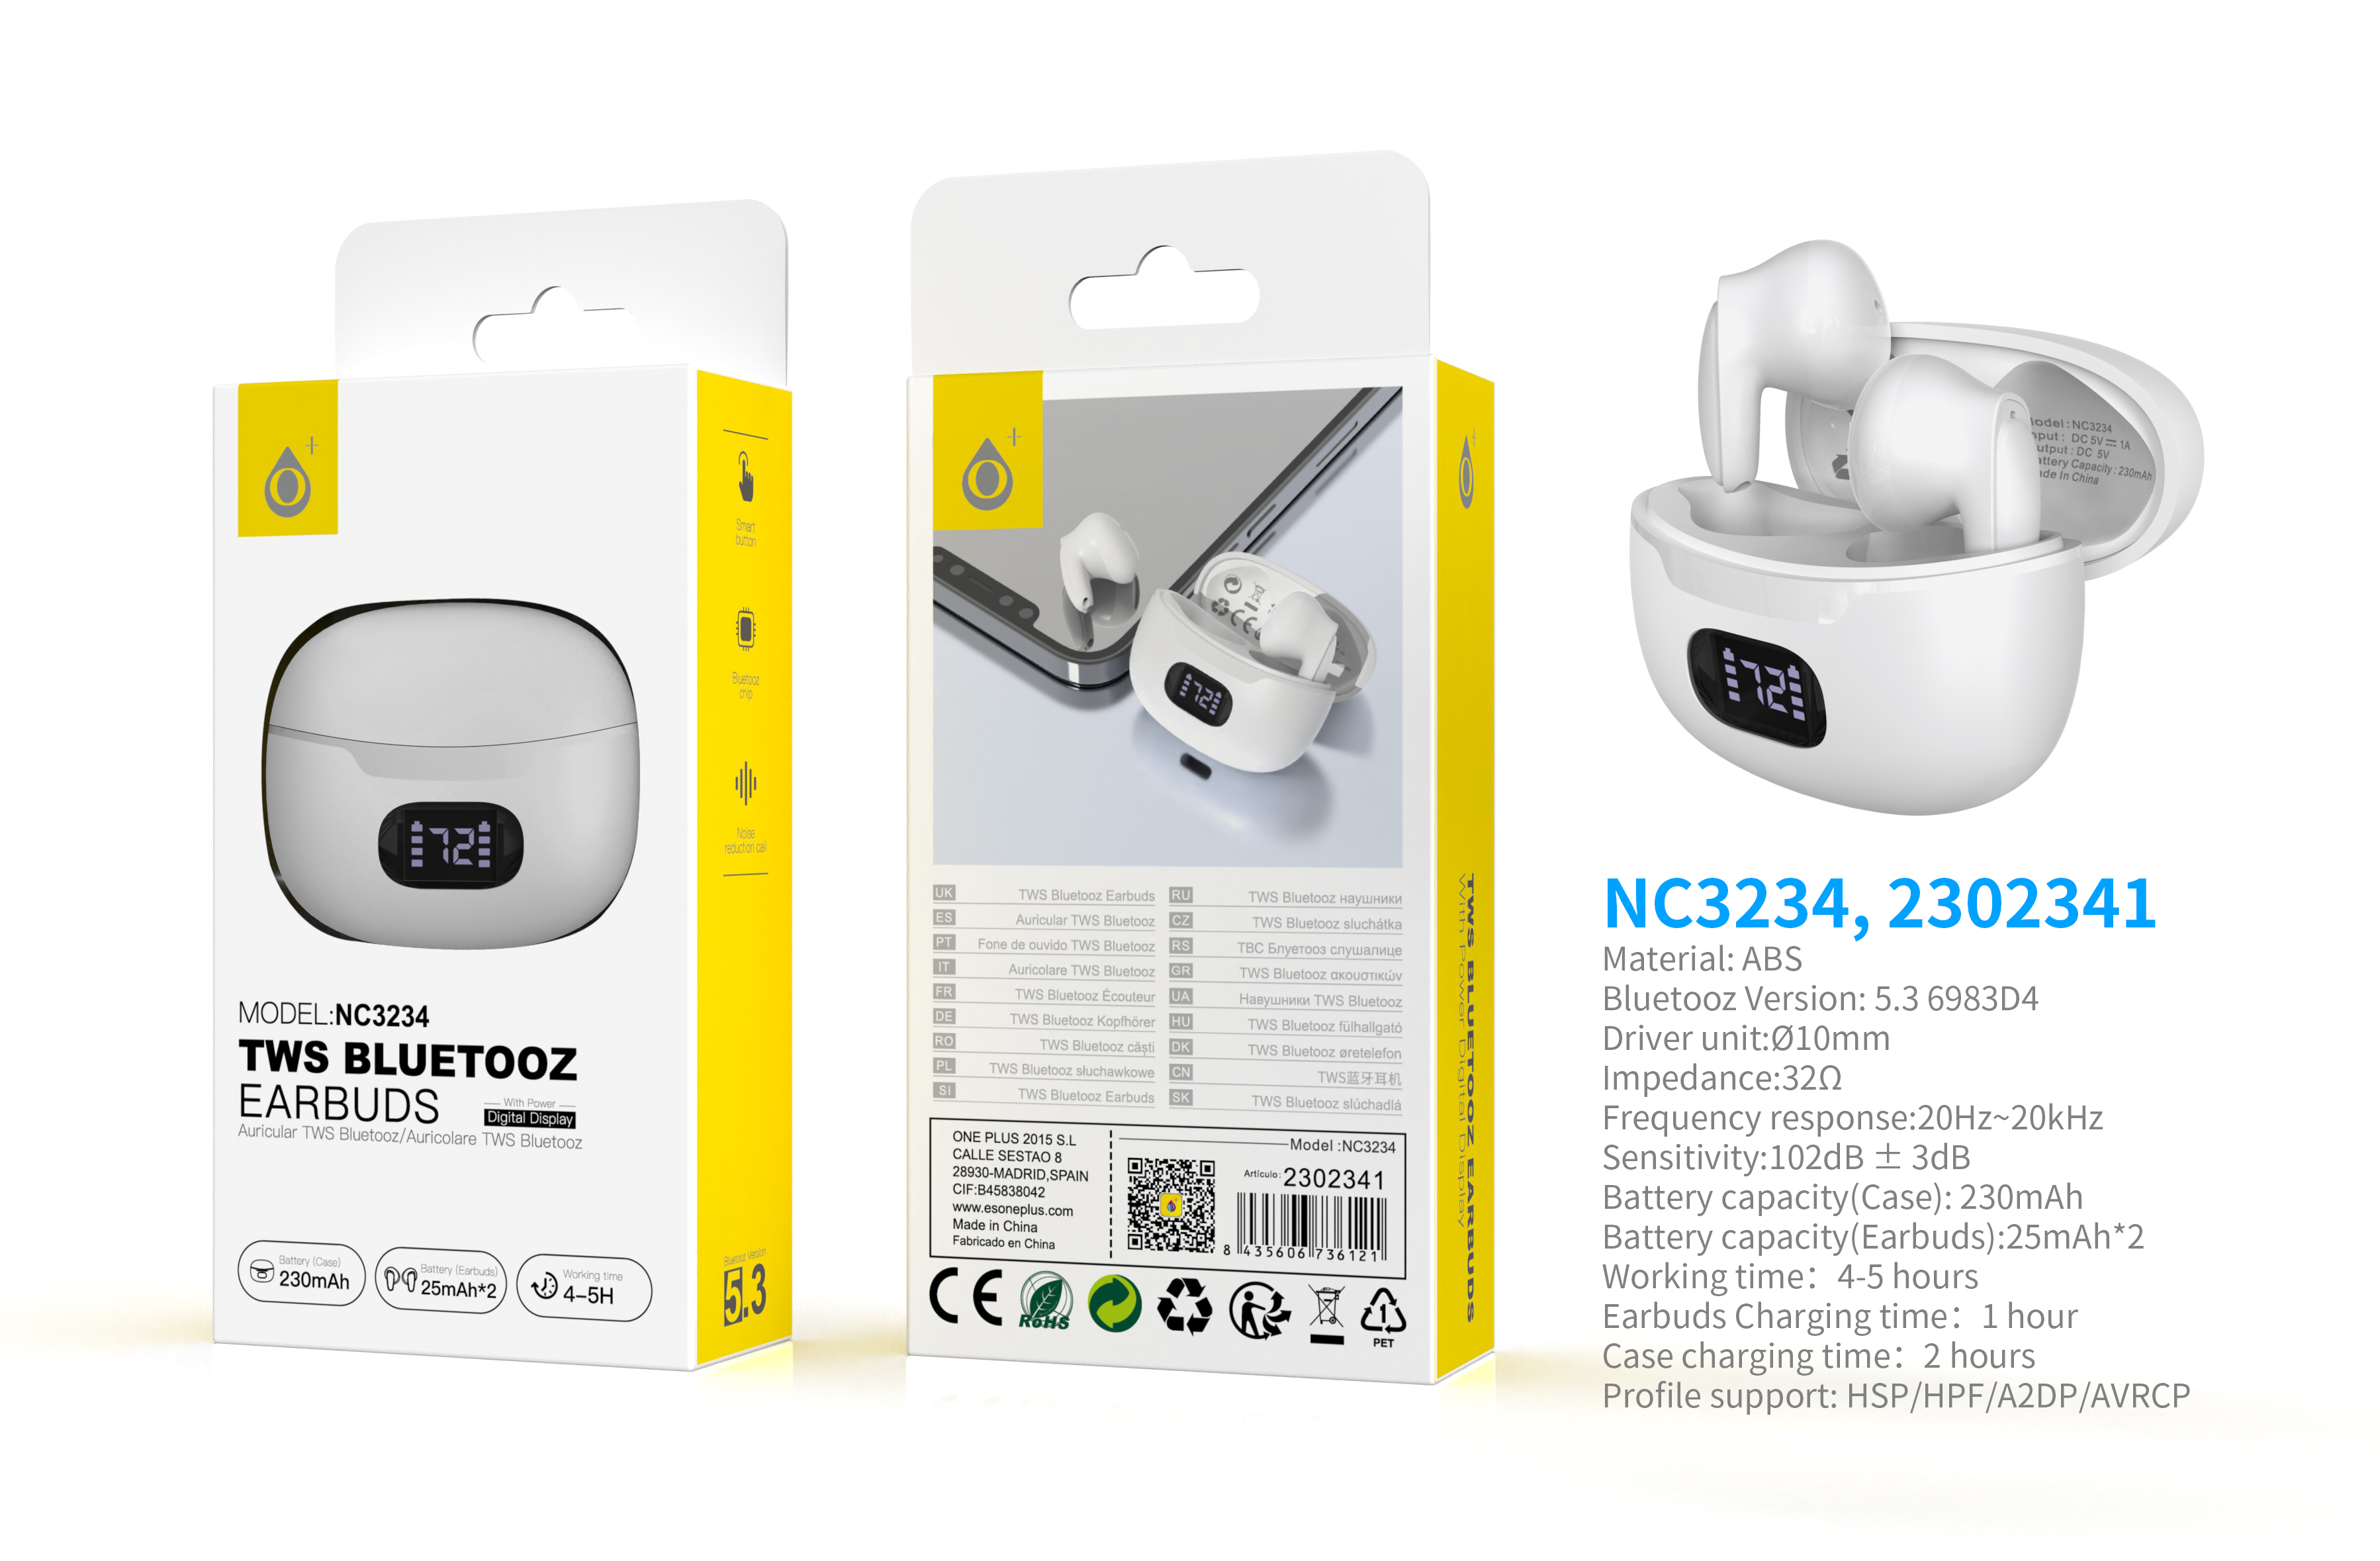 NC3234 BL Auriculares TWS Bluetooth 5.3  Bateria (25mAh*2) con estuche cargable(230mAh), Blanco